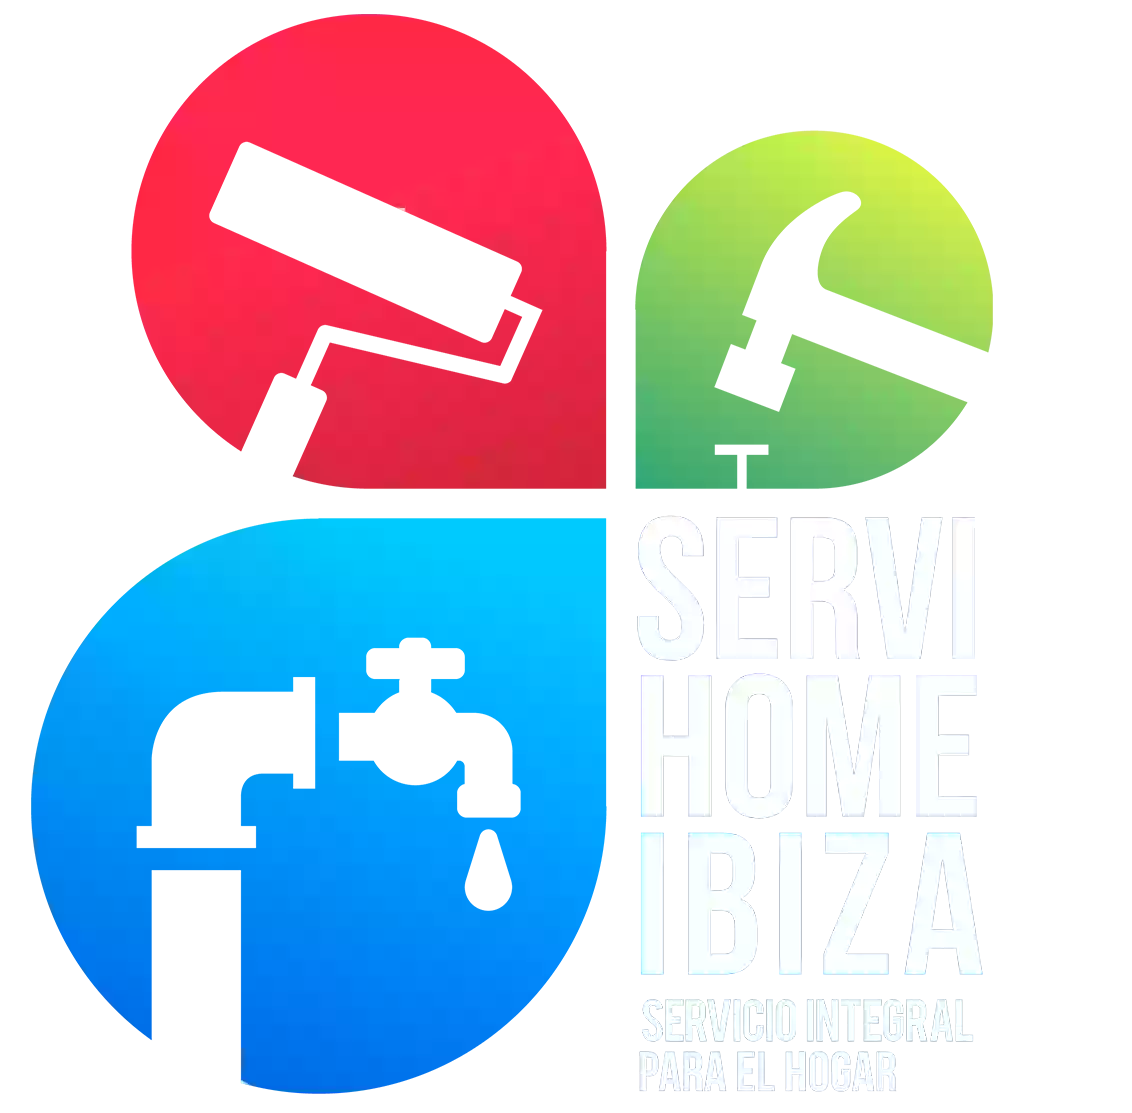 Servi Home Ibiza